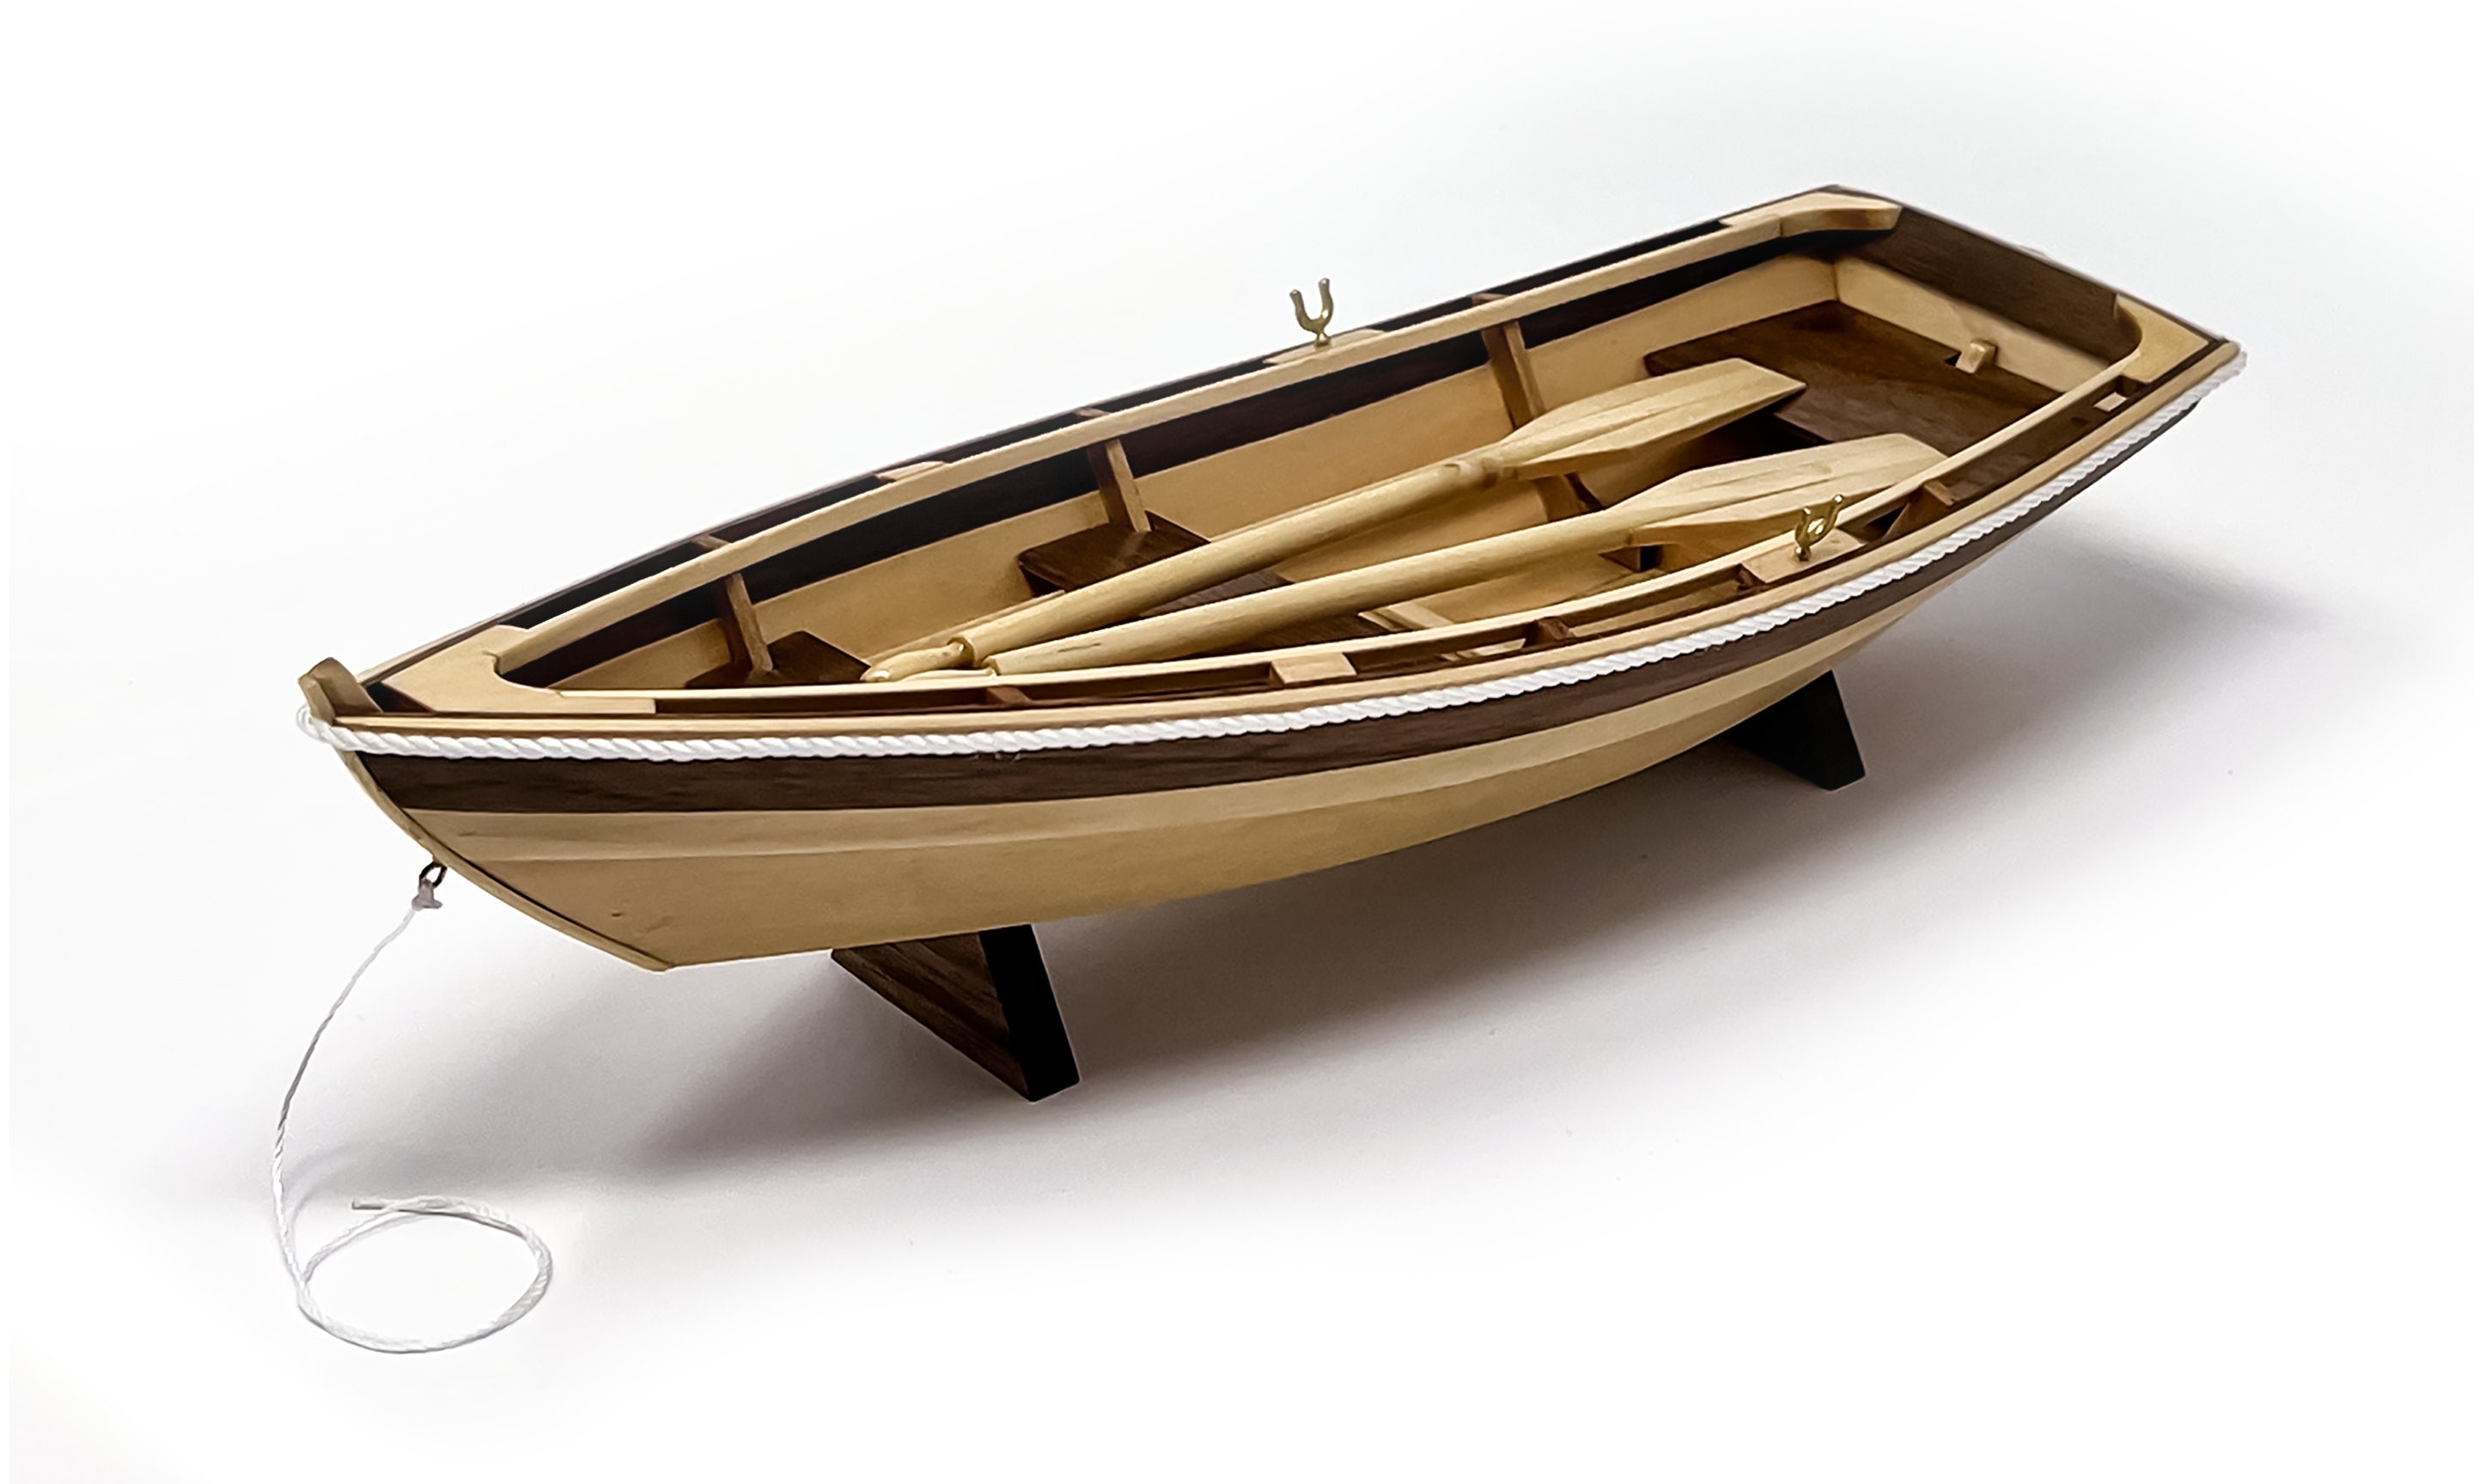 The Dinghy Row Boat Wooden Apprentice Skill Level 2 Model Boat Kit